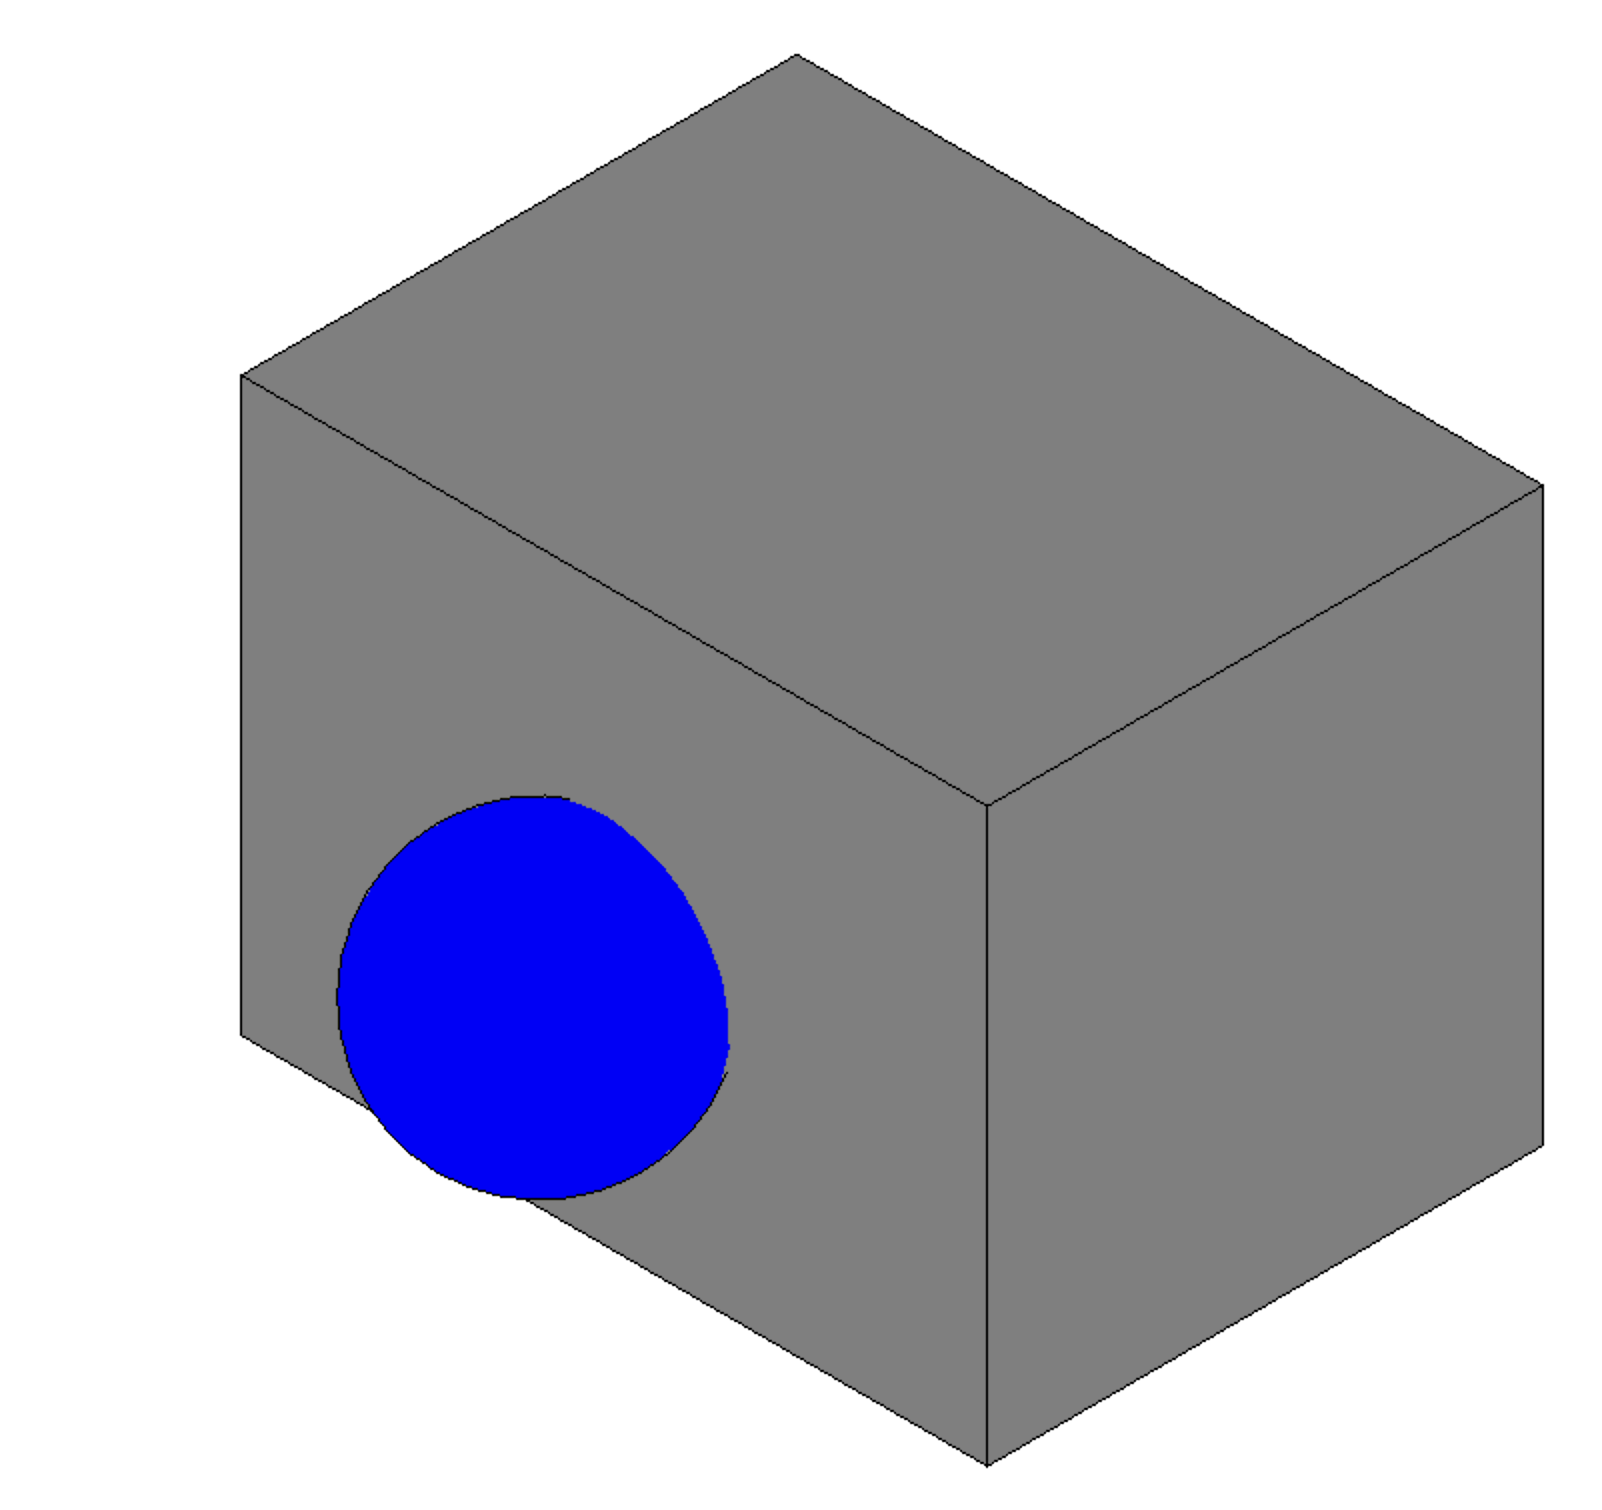 Cuboid and sphere Revit family